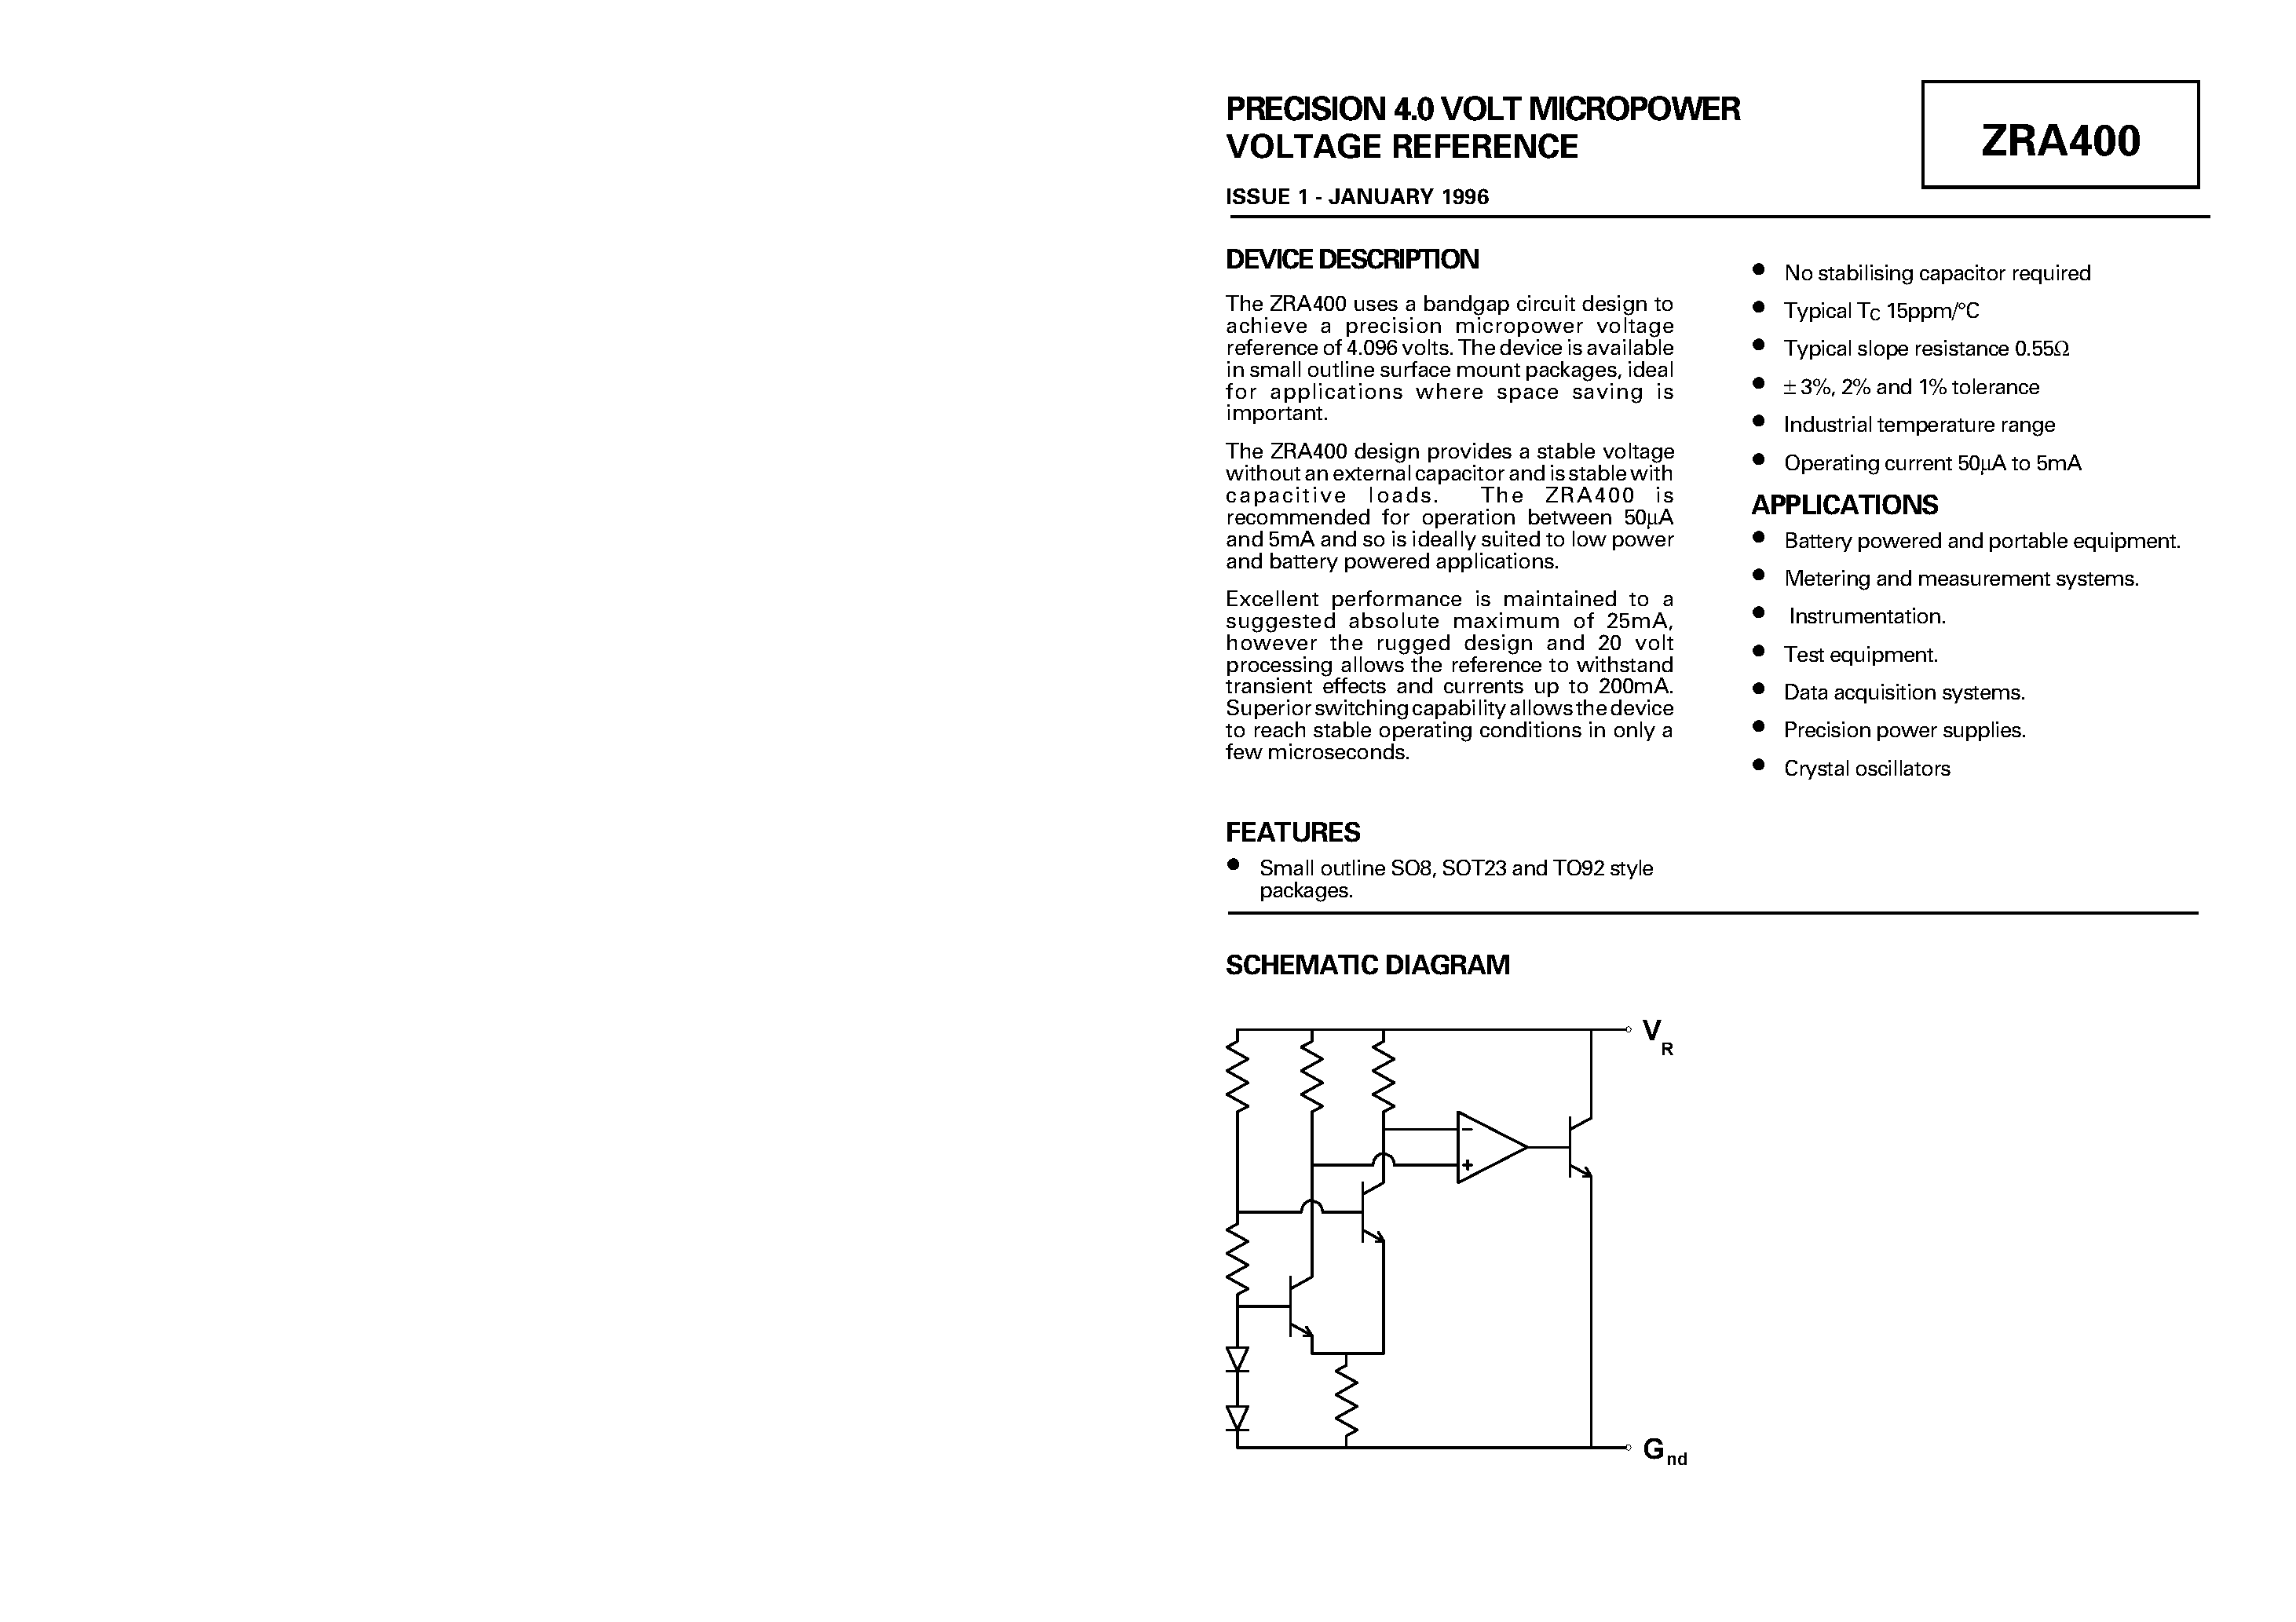 Datasheet ZRA400F03 - PRECISION 4.0 VOLT MICROPOWER page 1